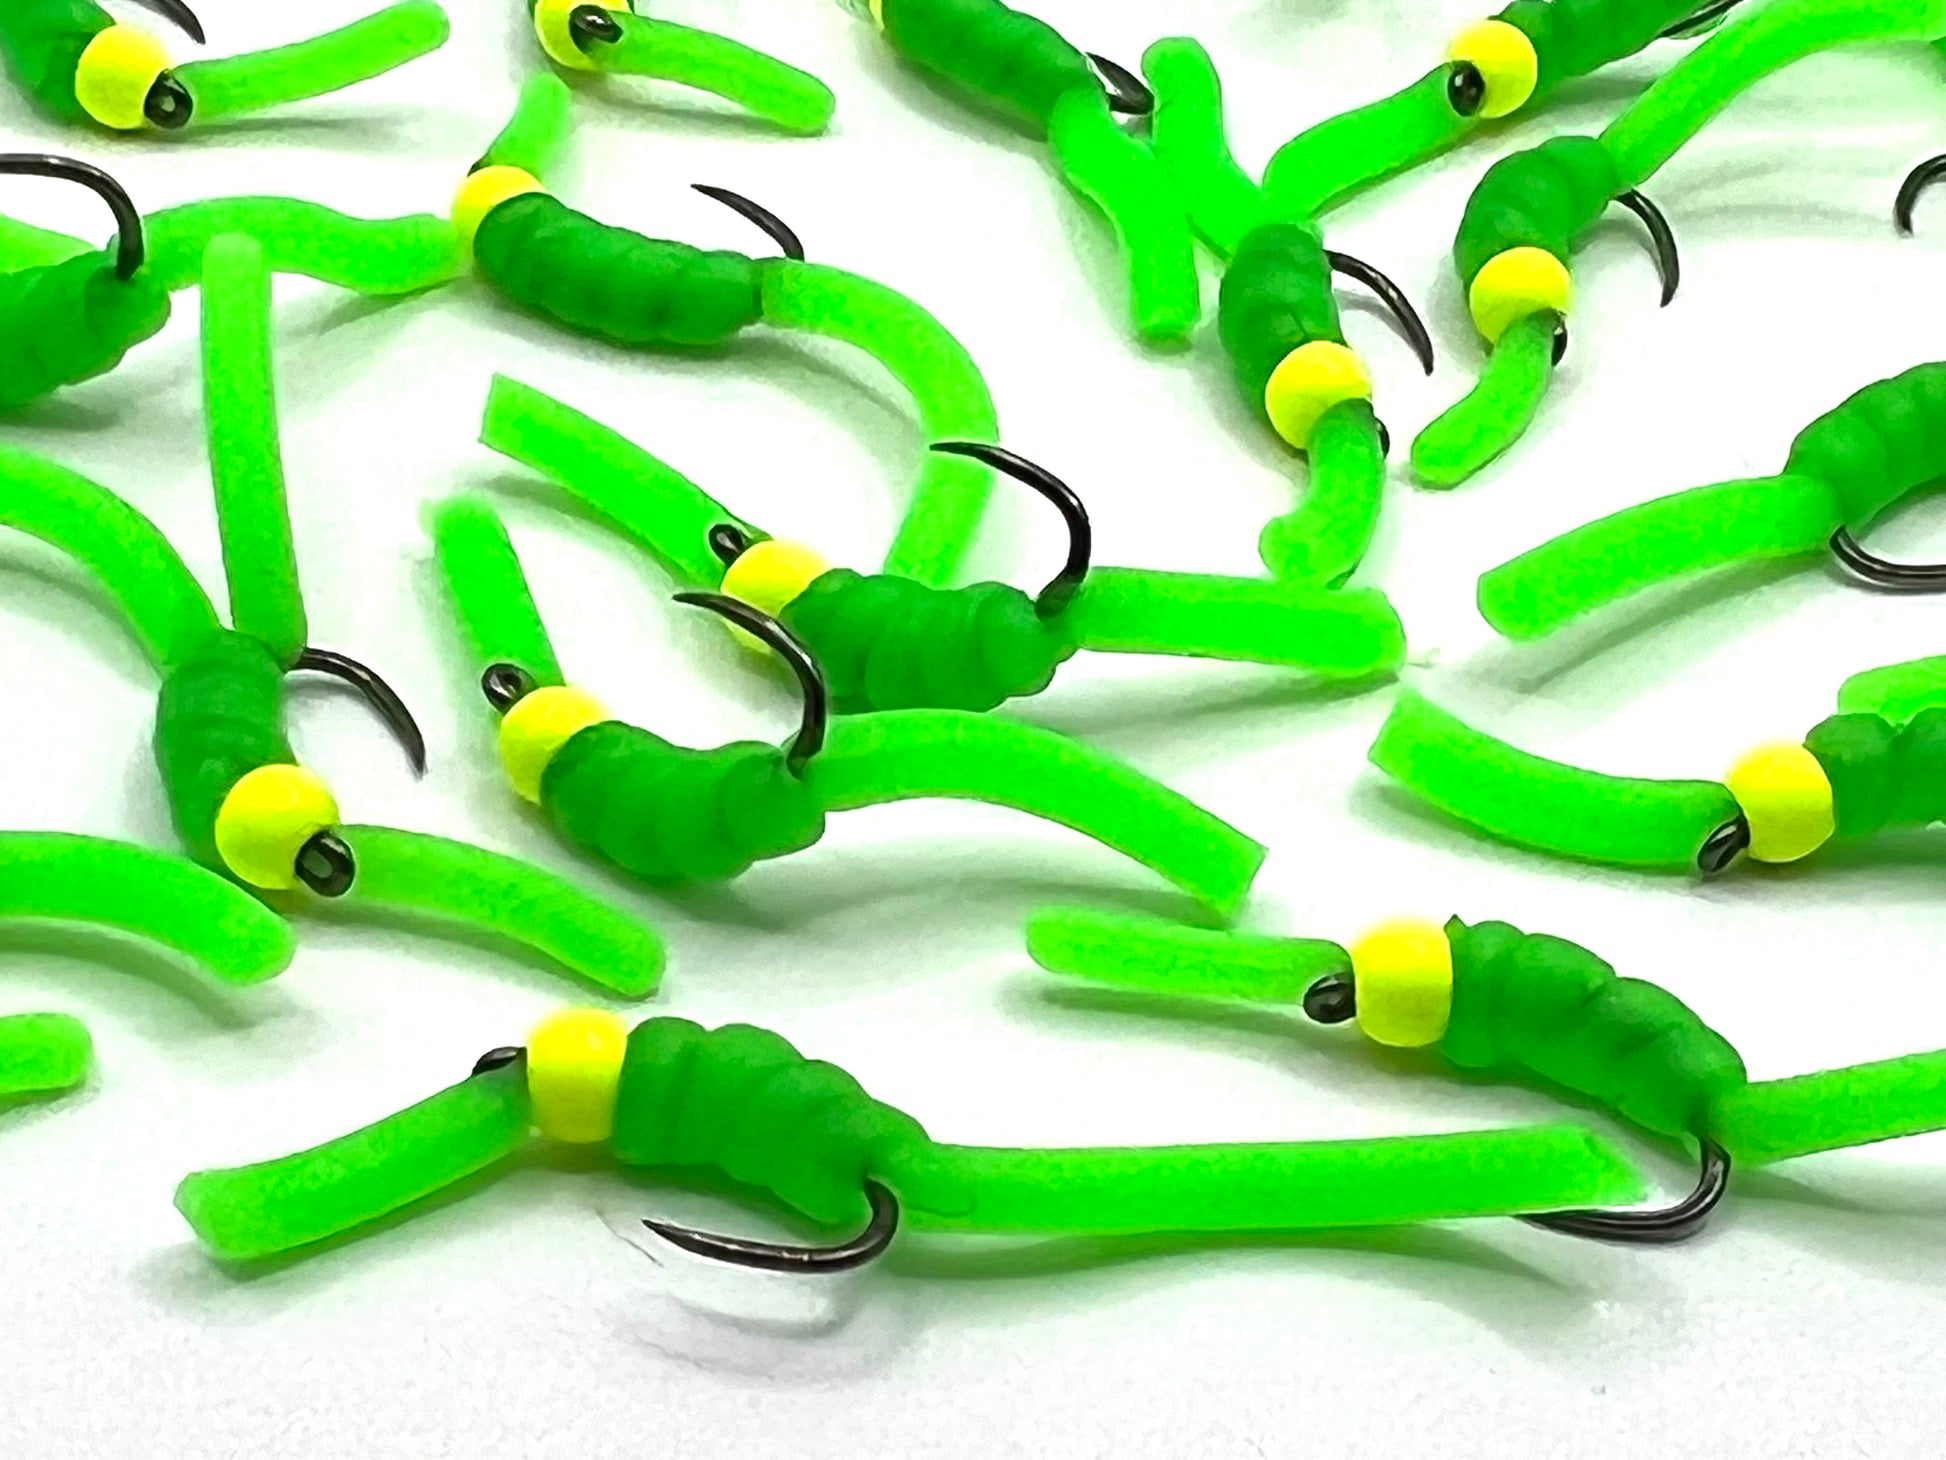 Fluorescent green squirmy worms